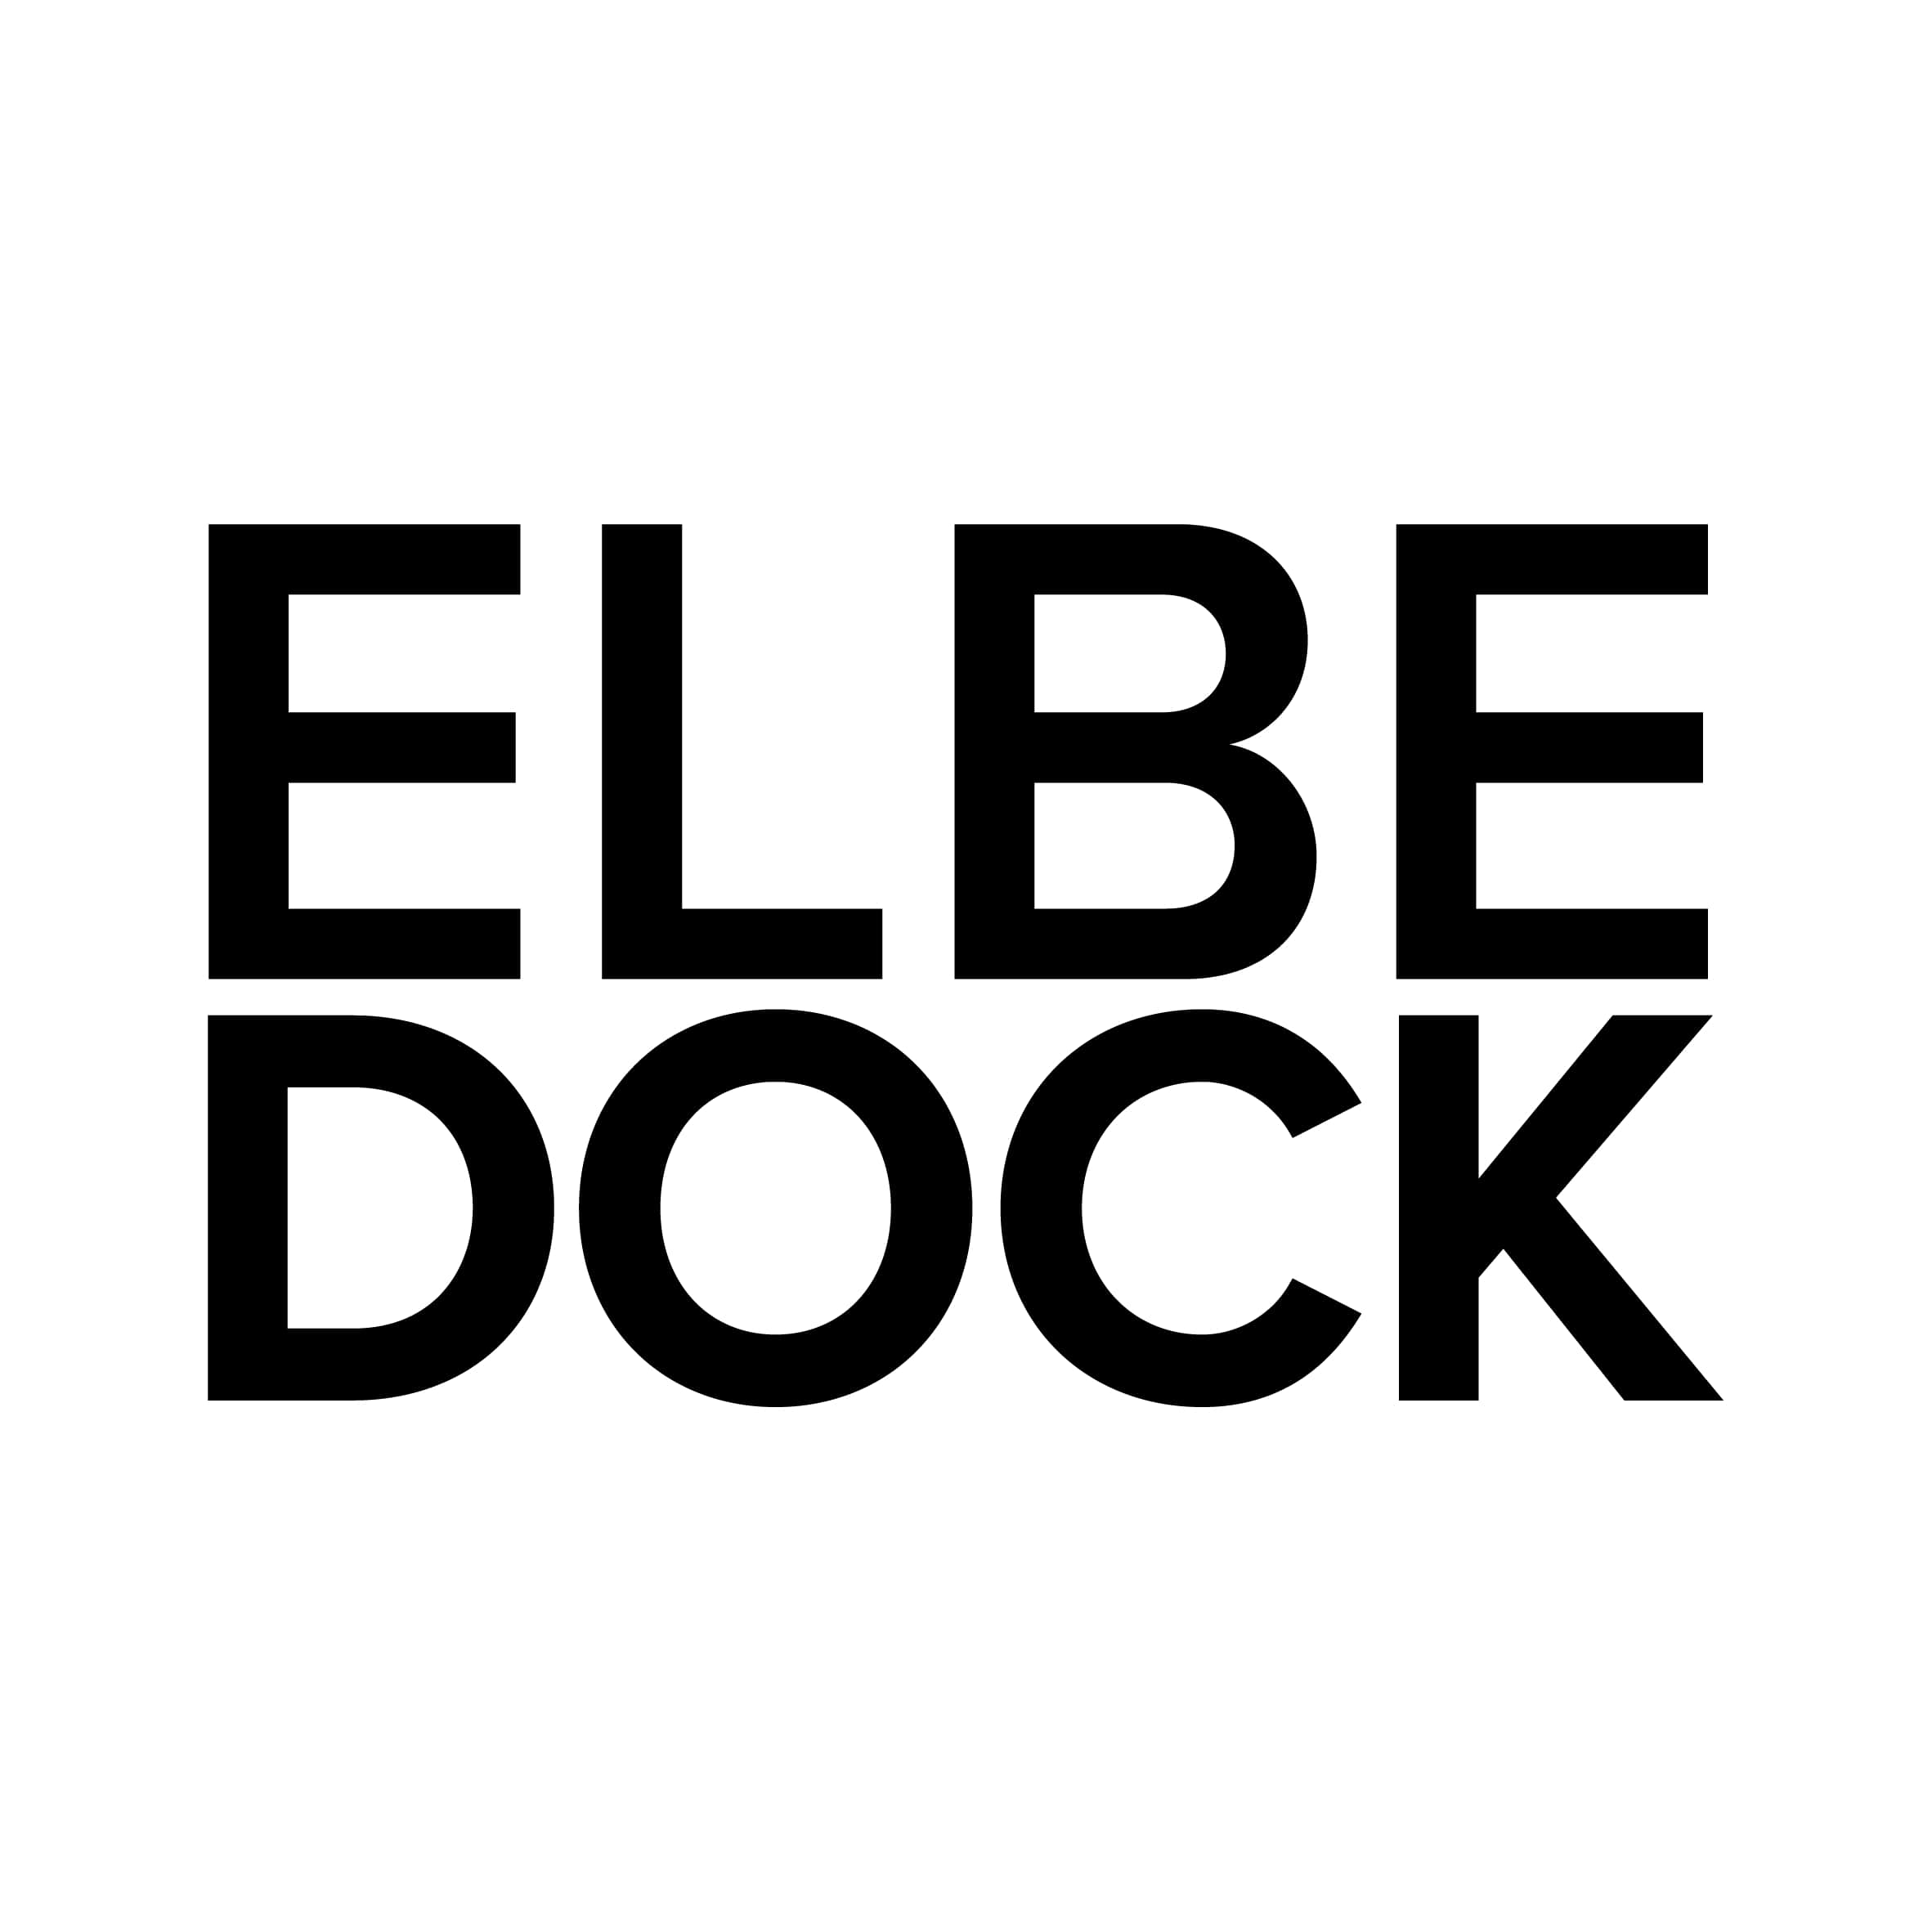 Elbe Dock Film Festival